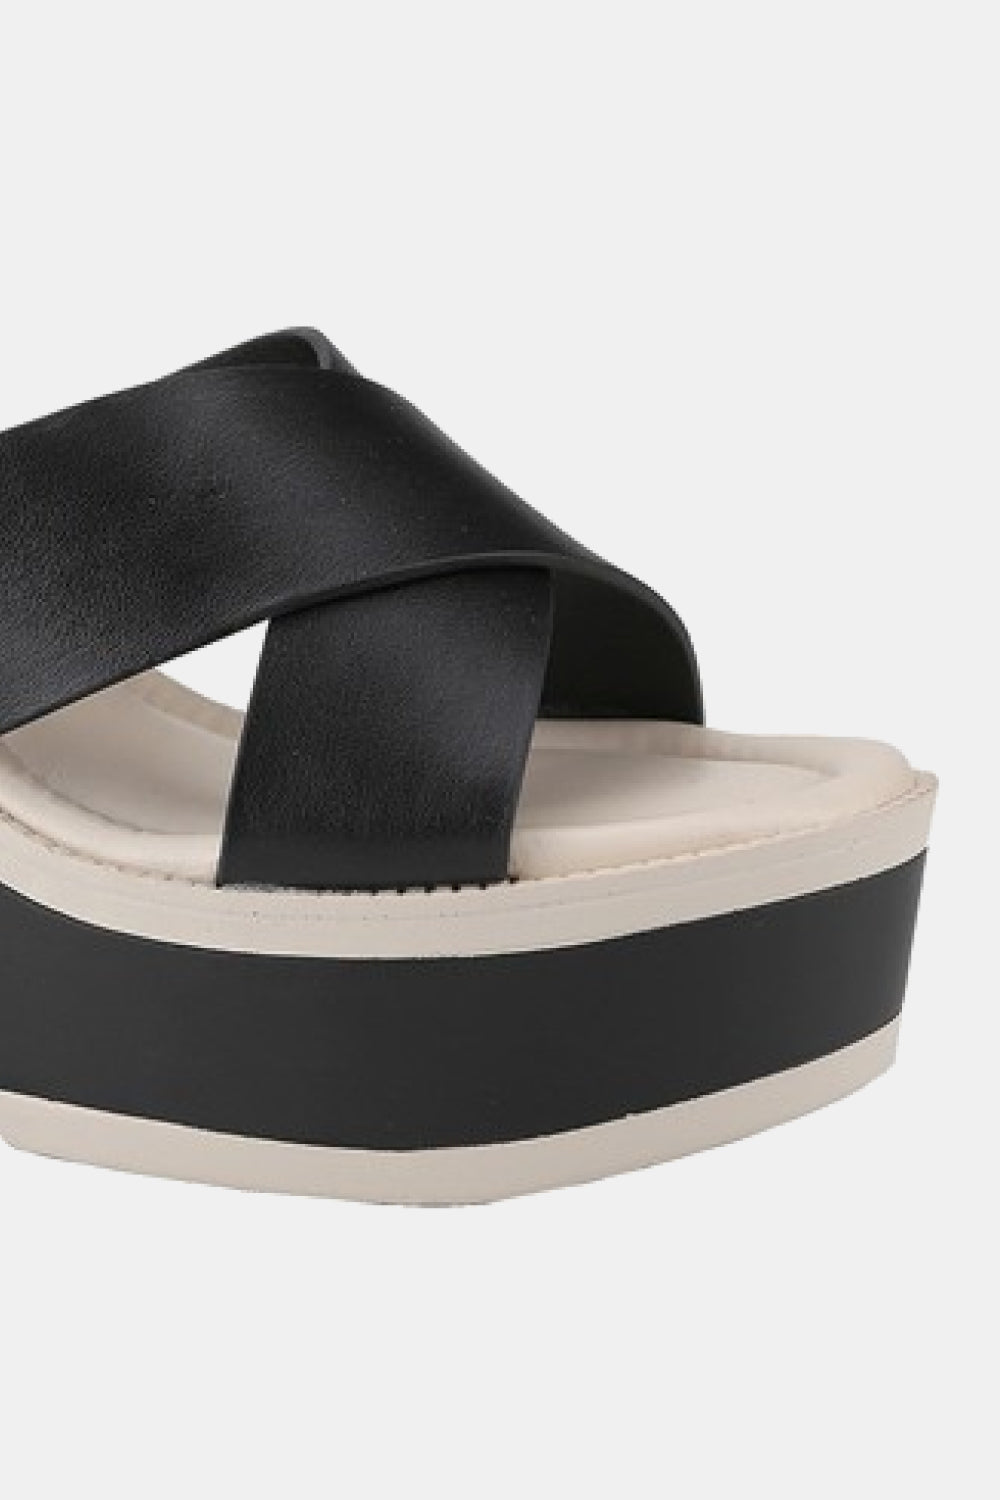 Contrast Platform Sandals in Black | Tigbuls Variety Fashion